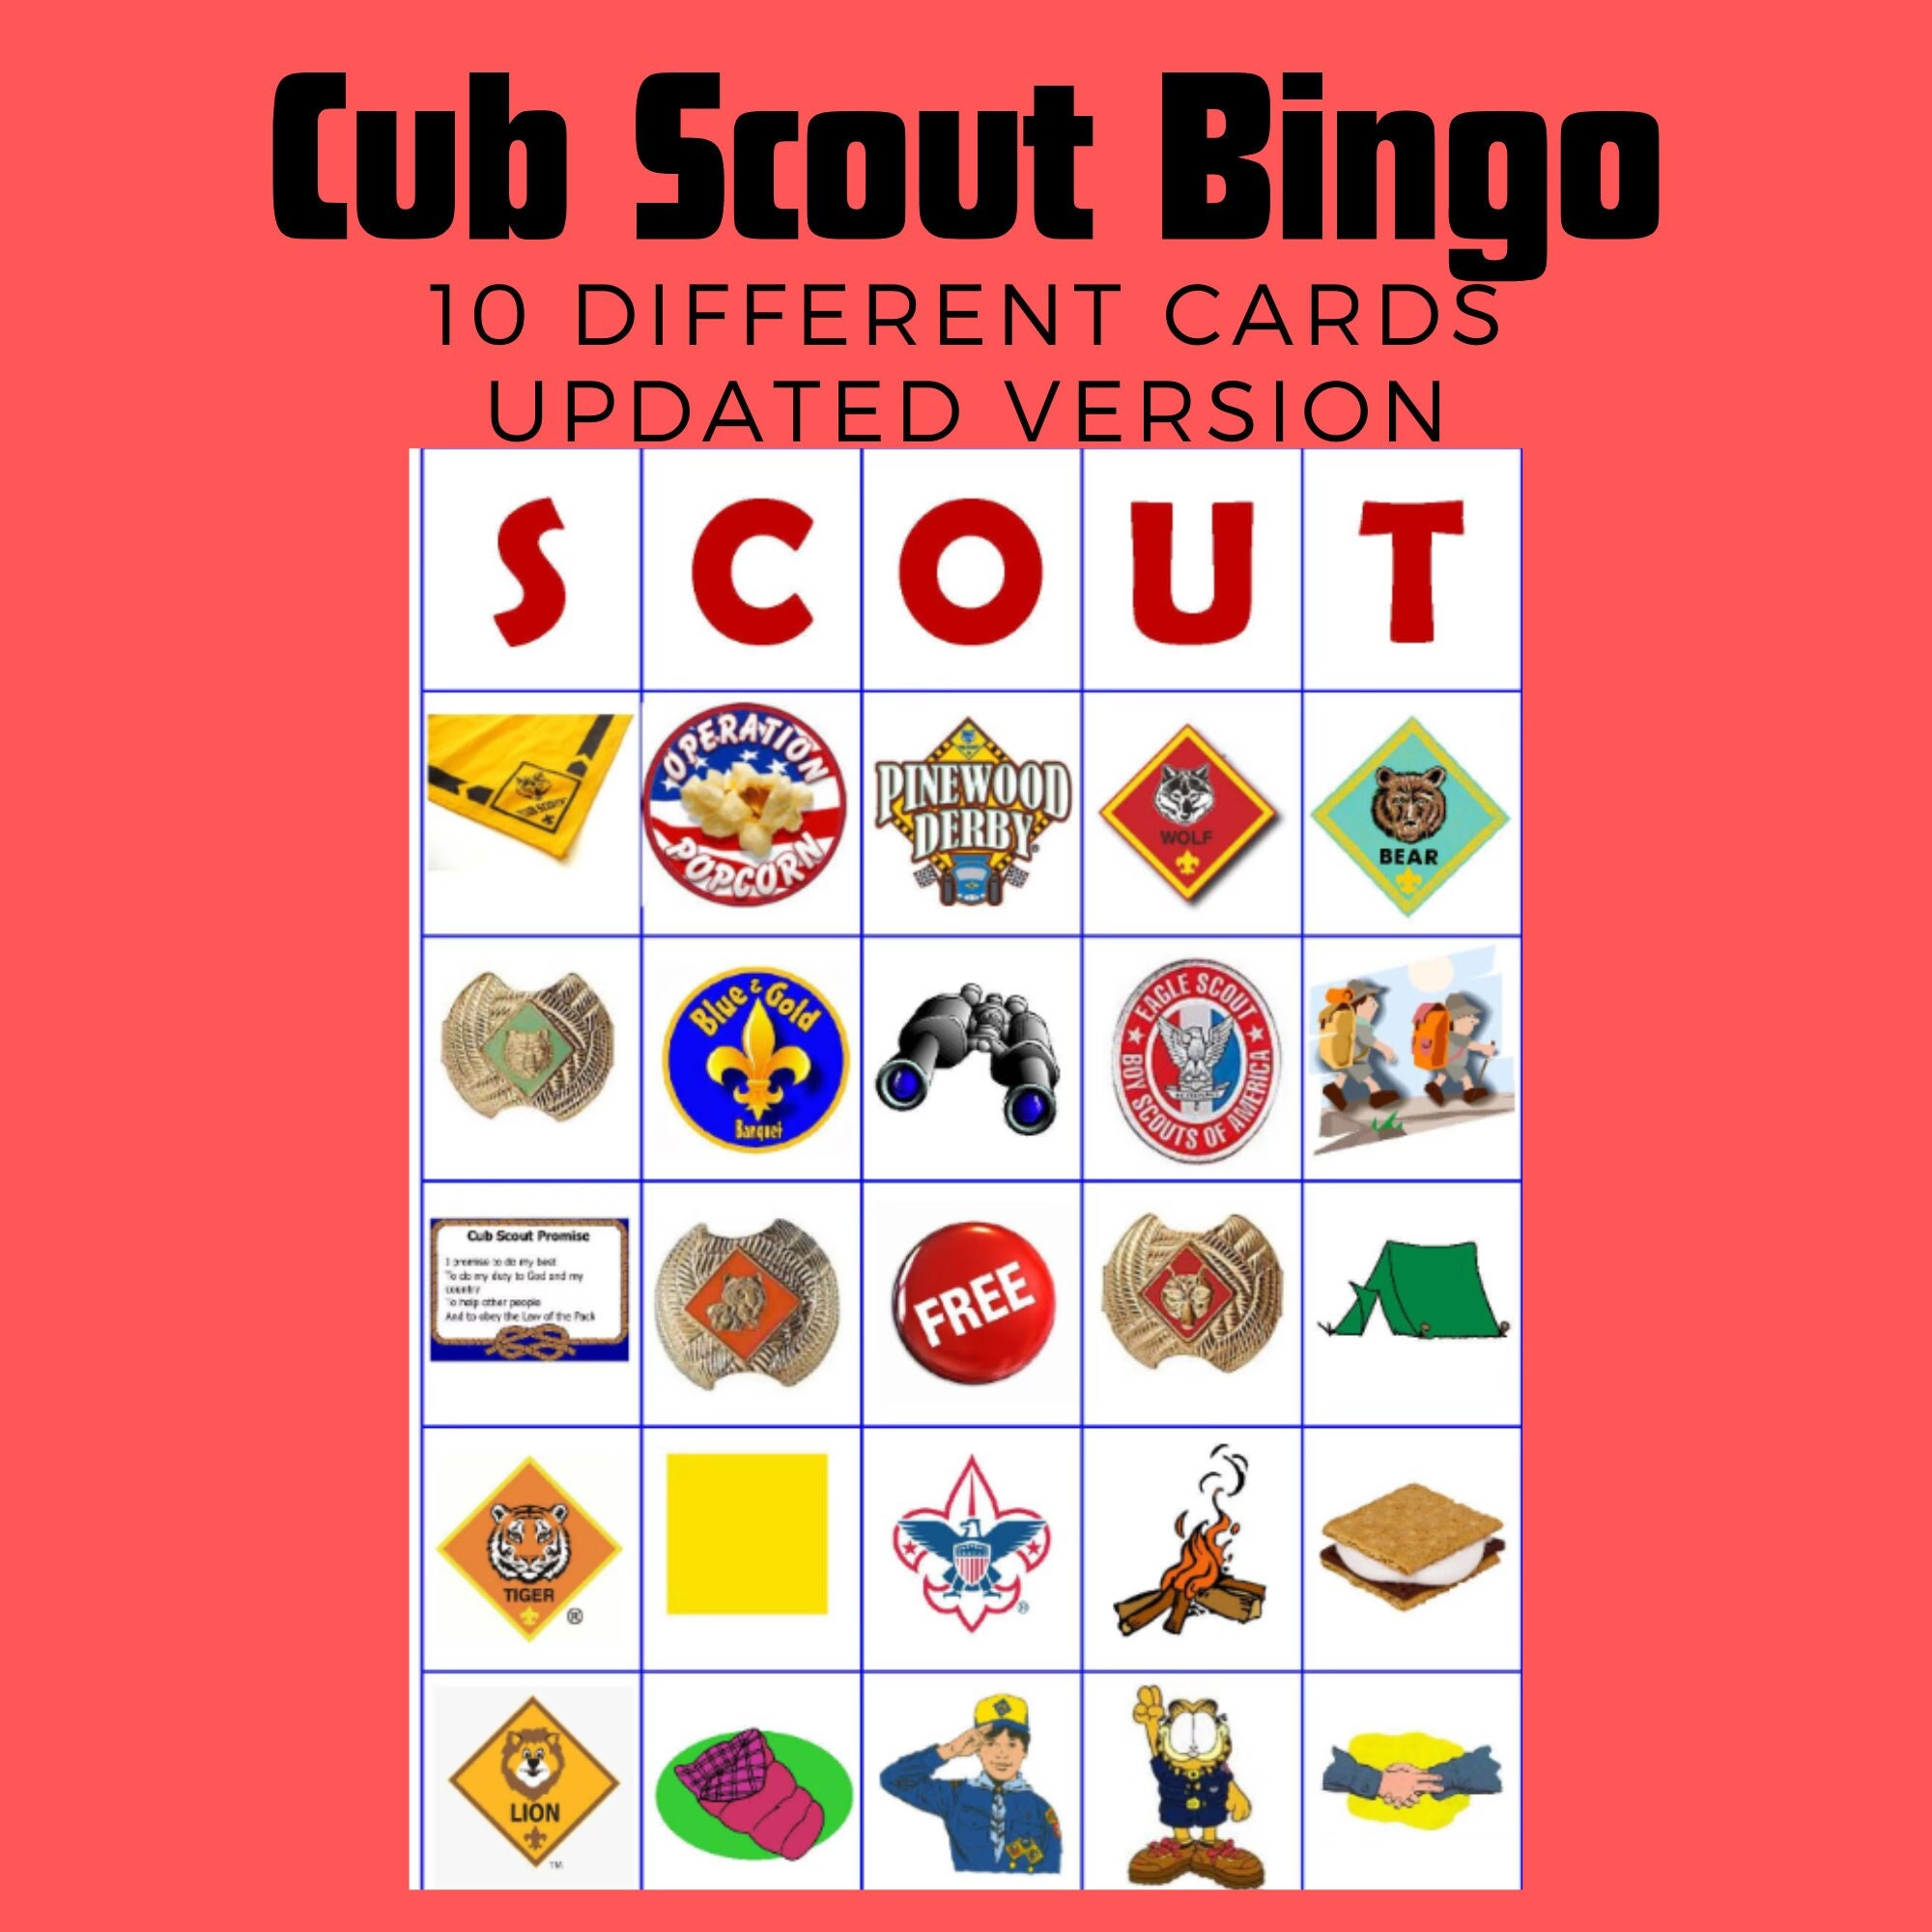 Cub Scout Pre-Cut Kit